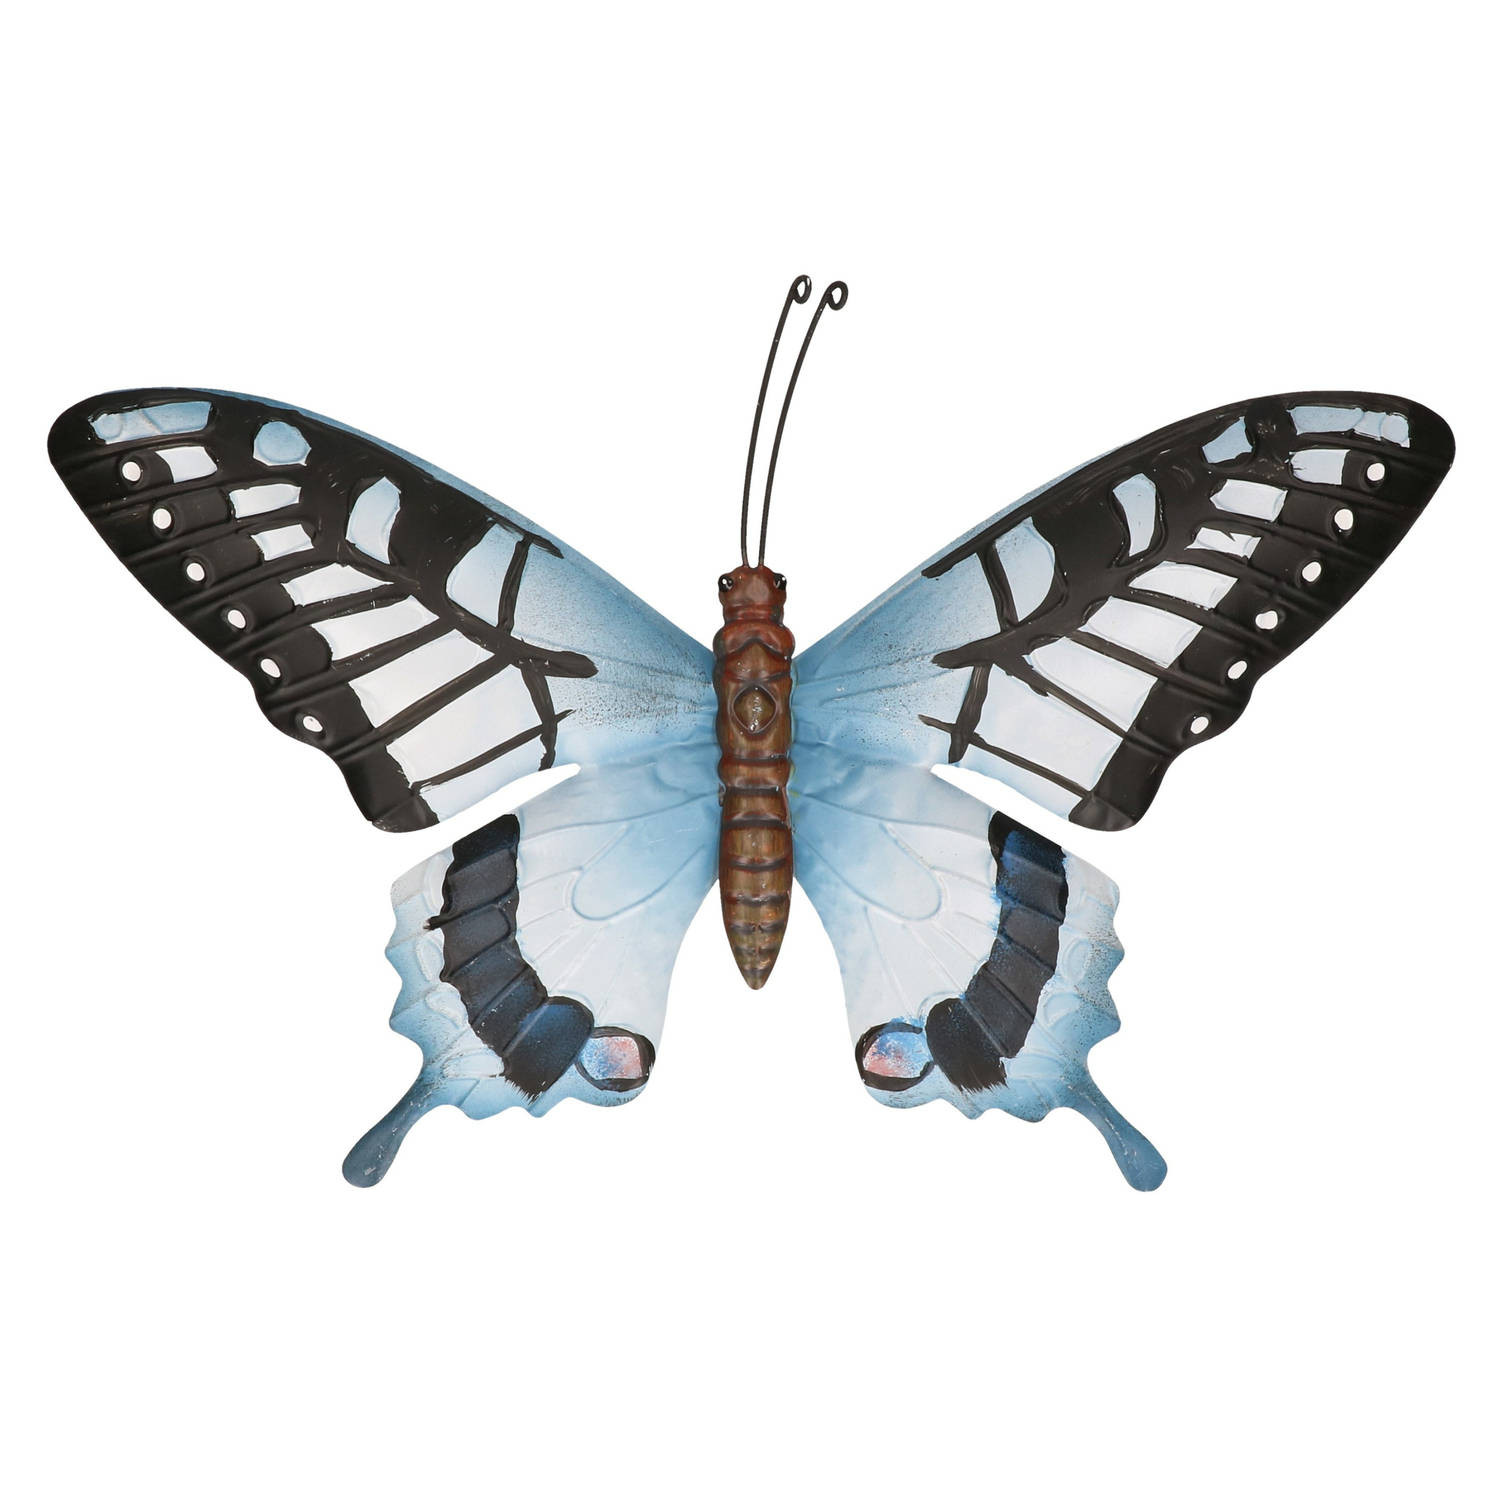 Tuindecoratie grijsblauw/zwarte vlinder 35 cm - Tuinbeelden